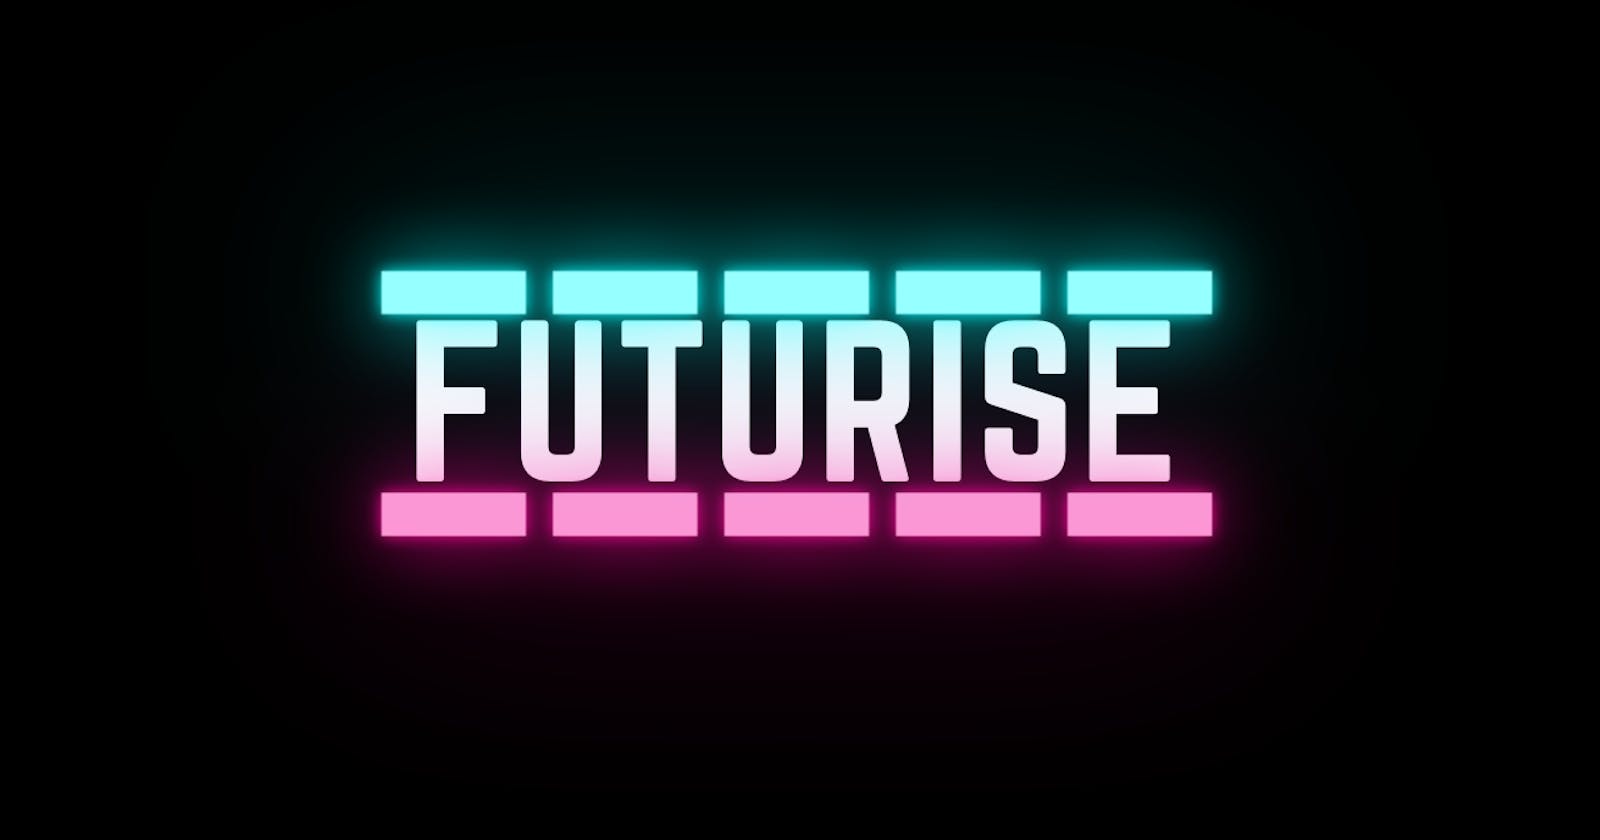 Futurise | The Student's Discord Server